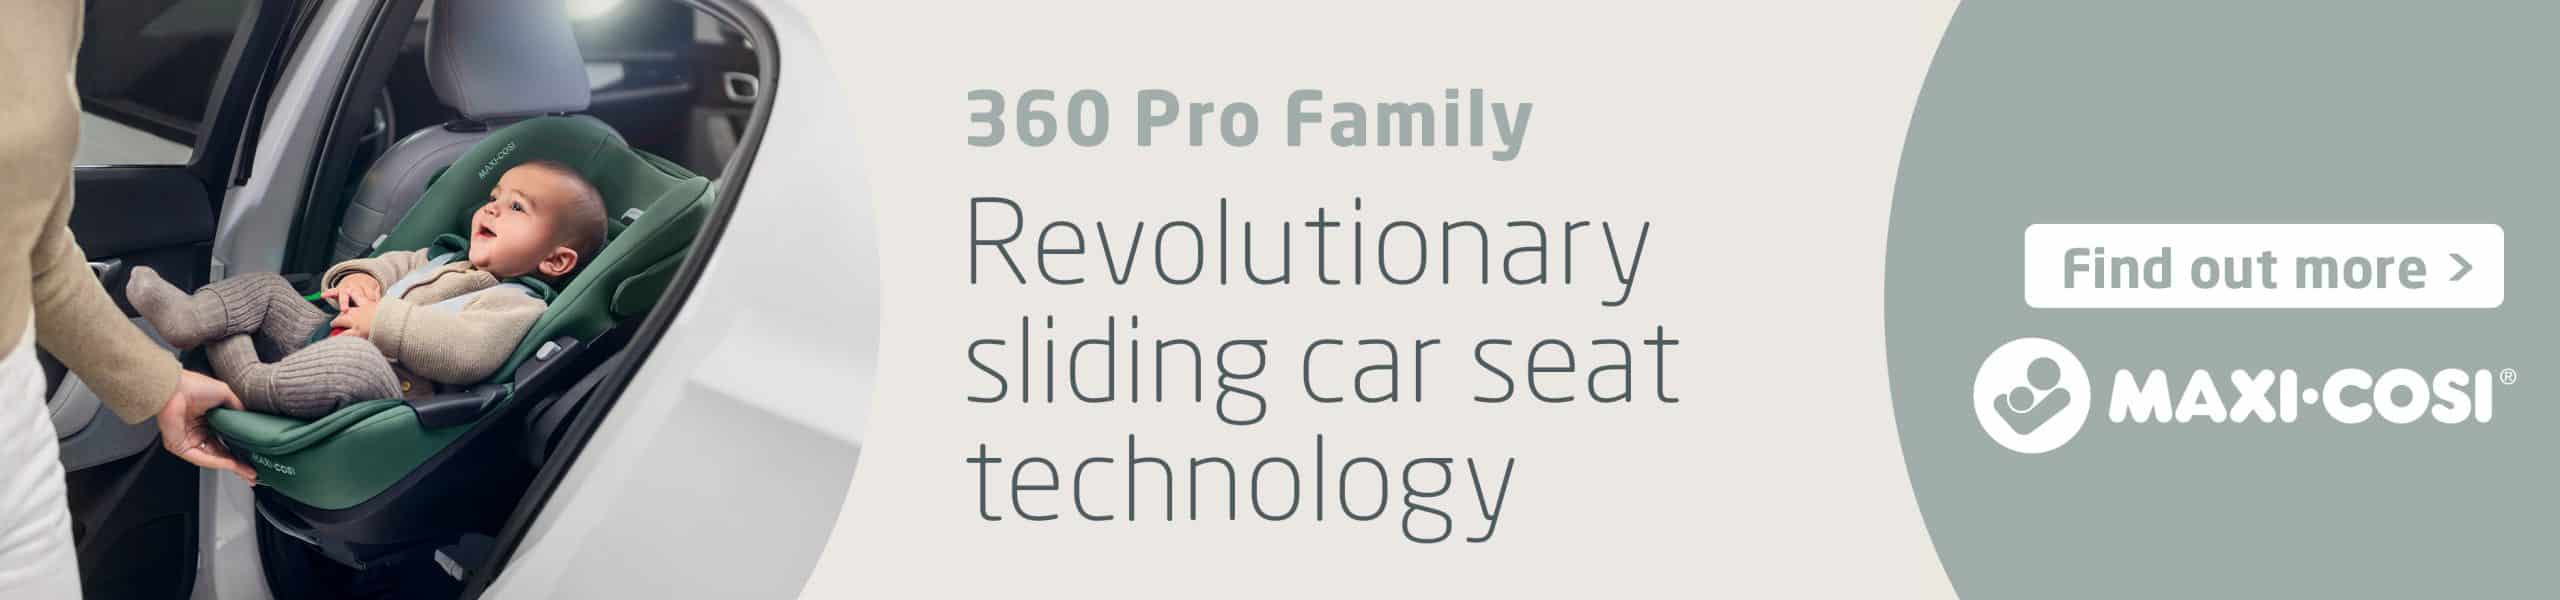 Maxi Cosi 360 Pro Car Seat Range